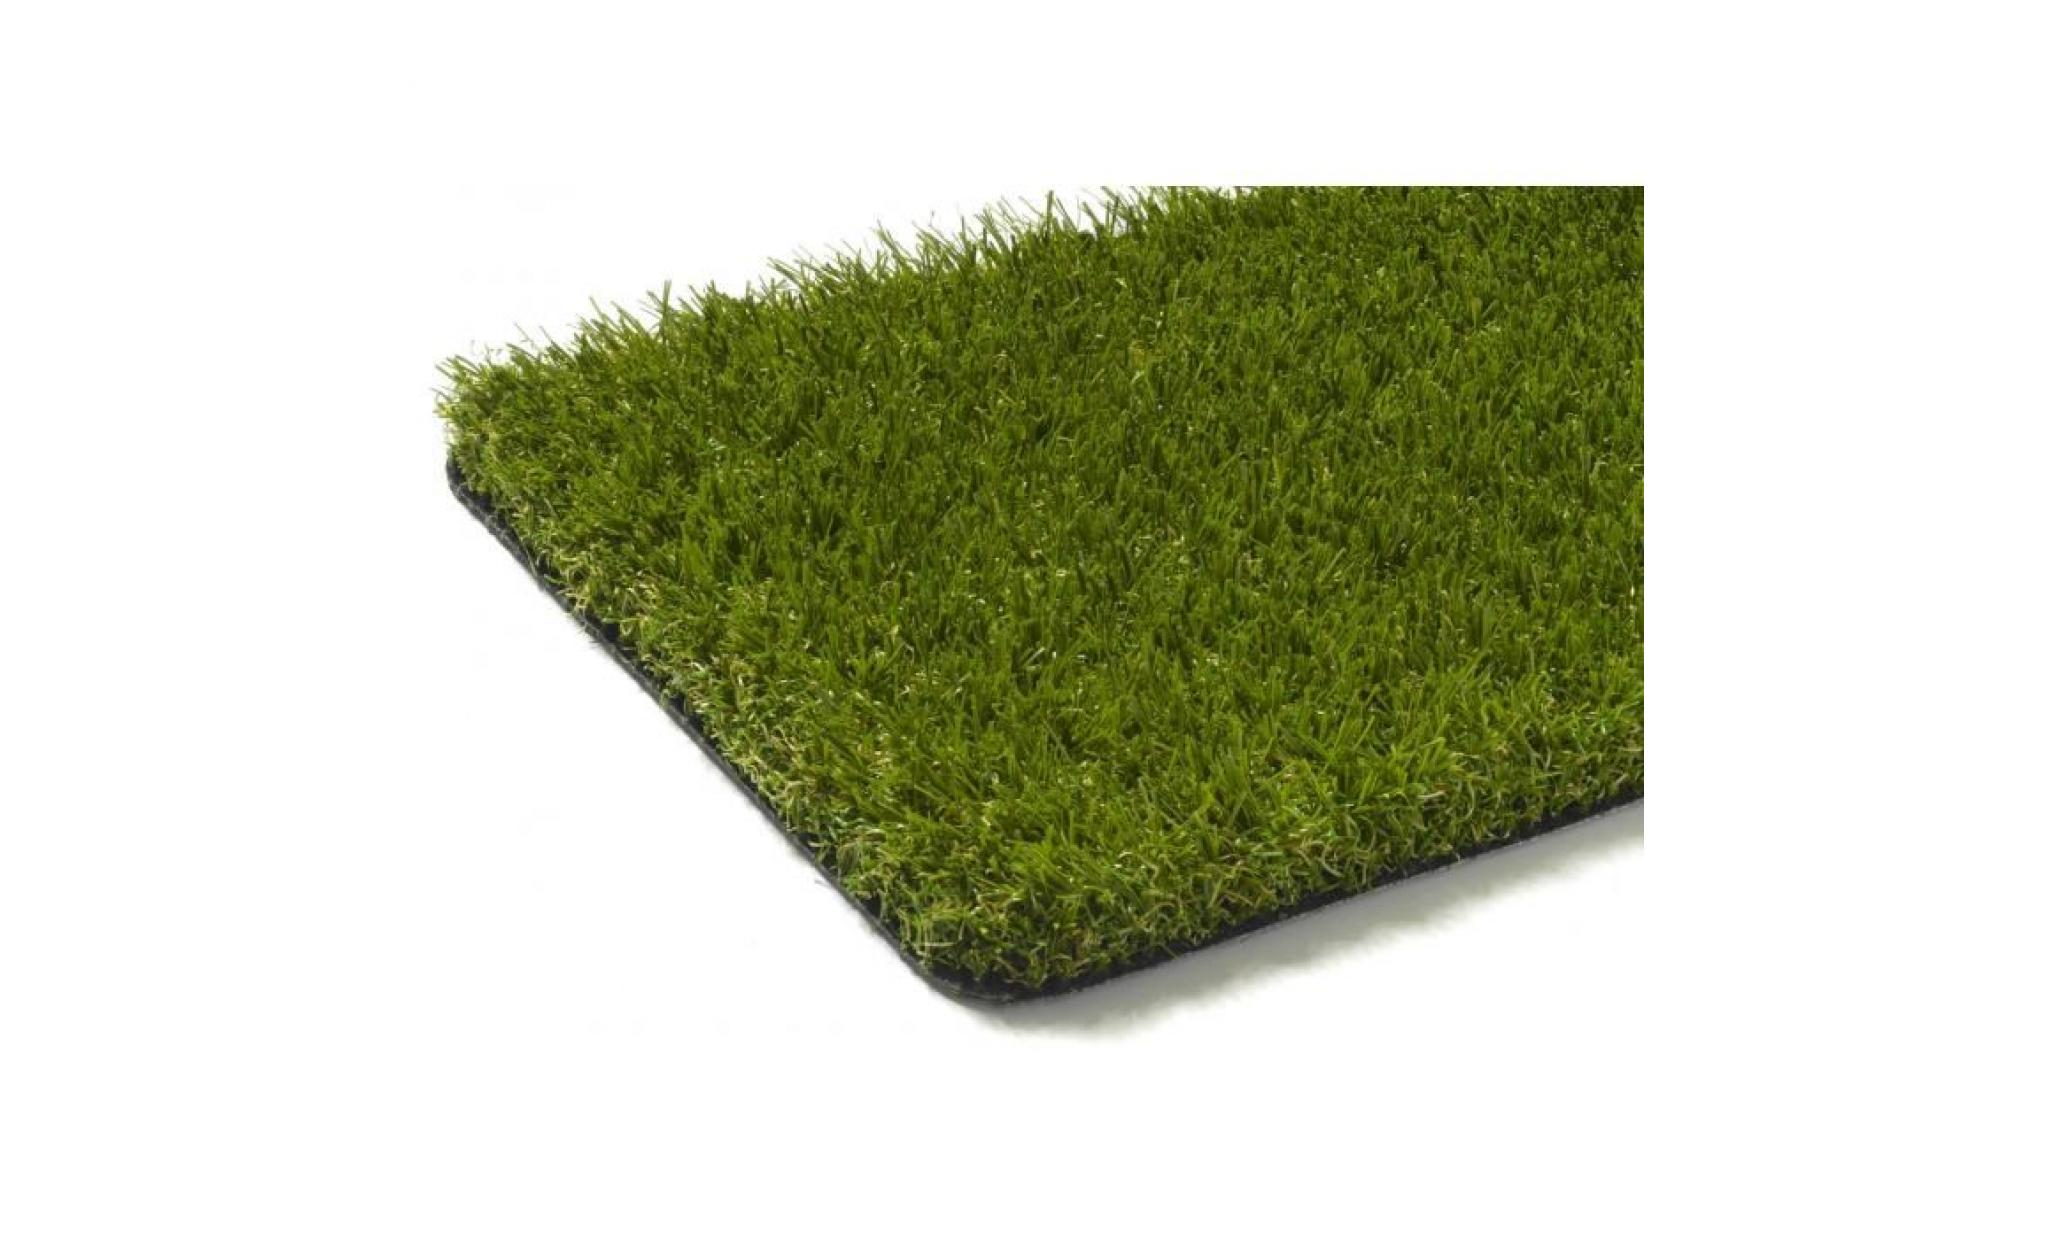 oxford   tapis type luxe gazon artificiel – pour jardin, terrasse, balcon   vert  [200x250 cm]